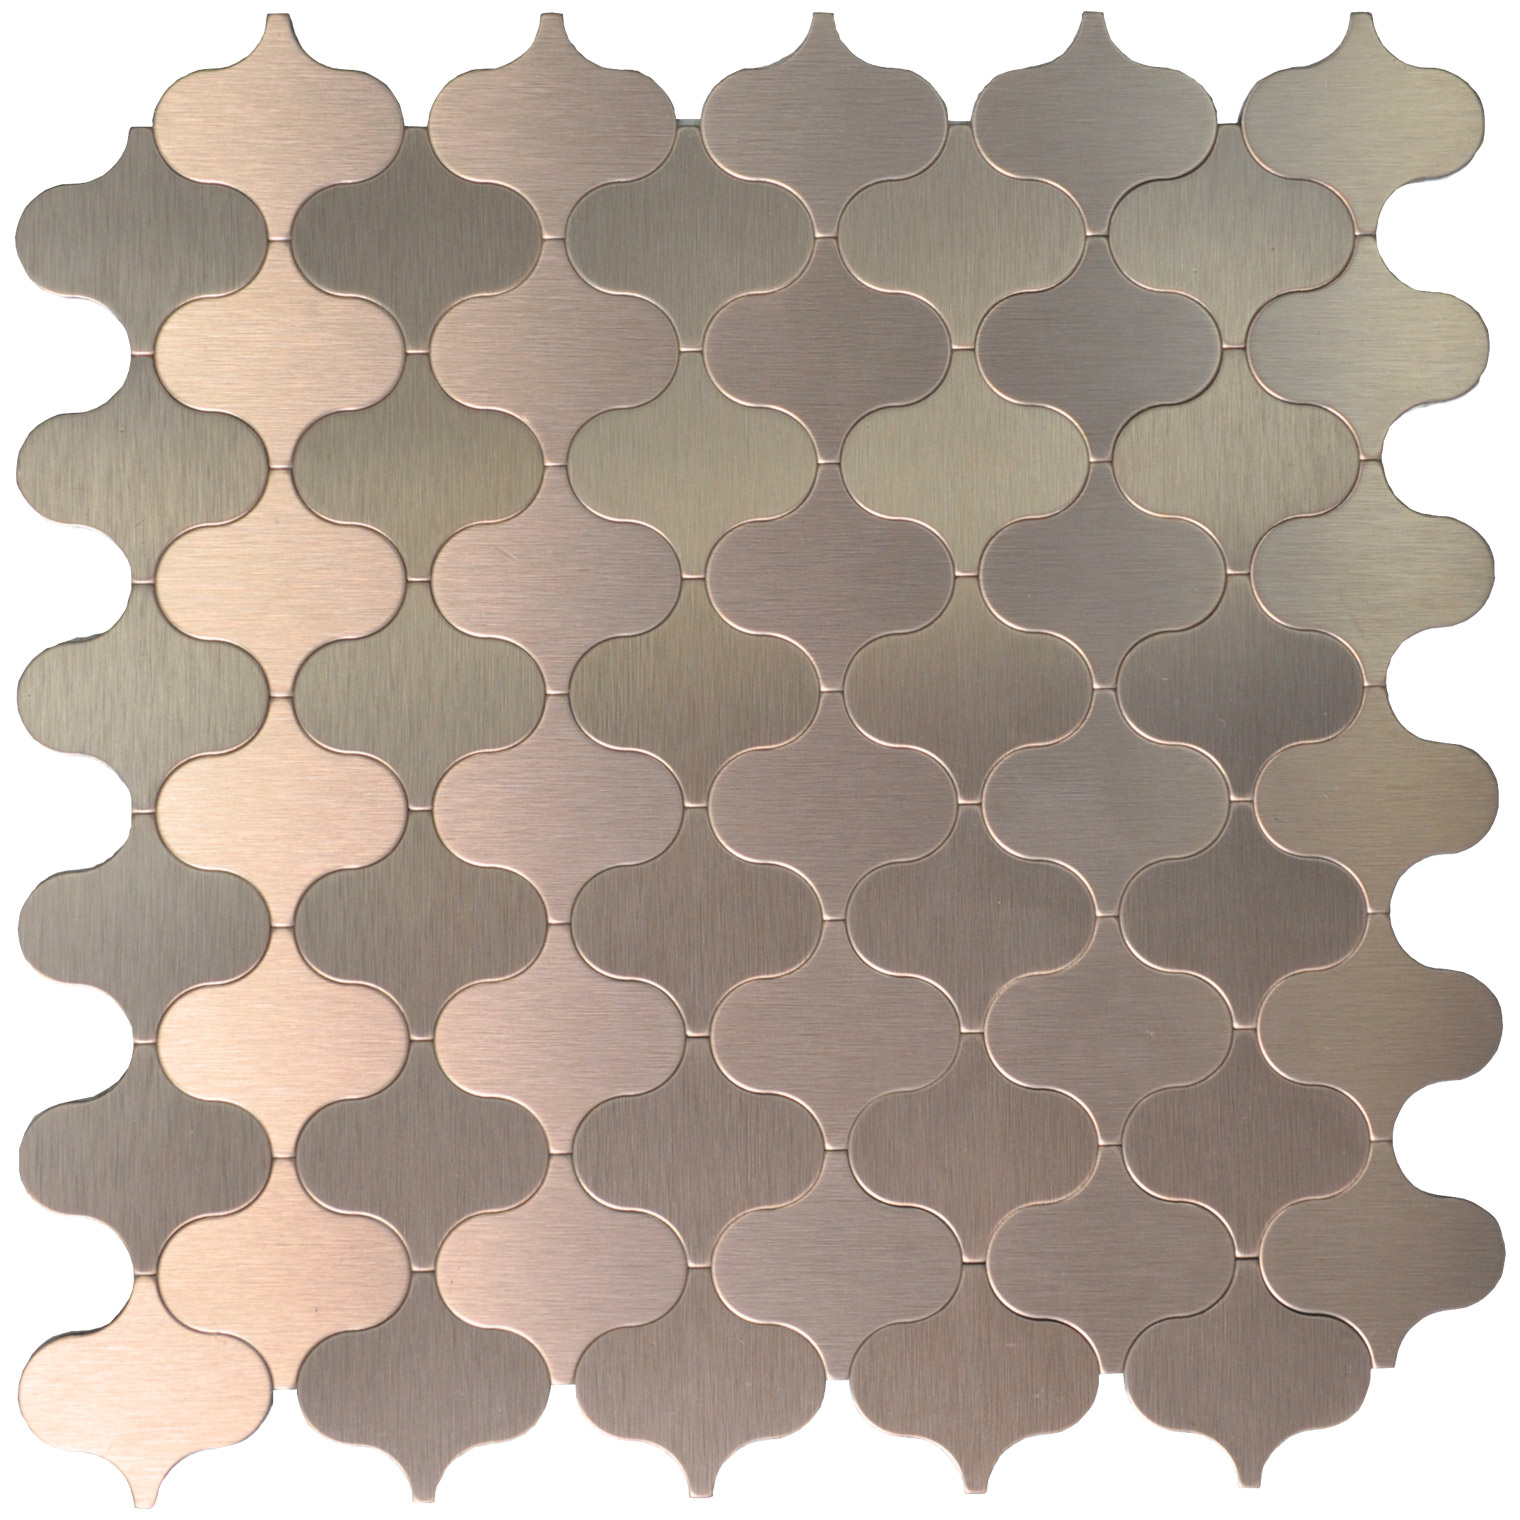 A16005 - 10 Sheets Peel & Stick Aluminum Metal Mosaic Tile Bronze Lantern Style 12x12In